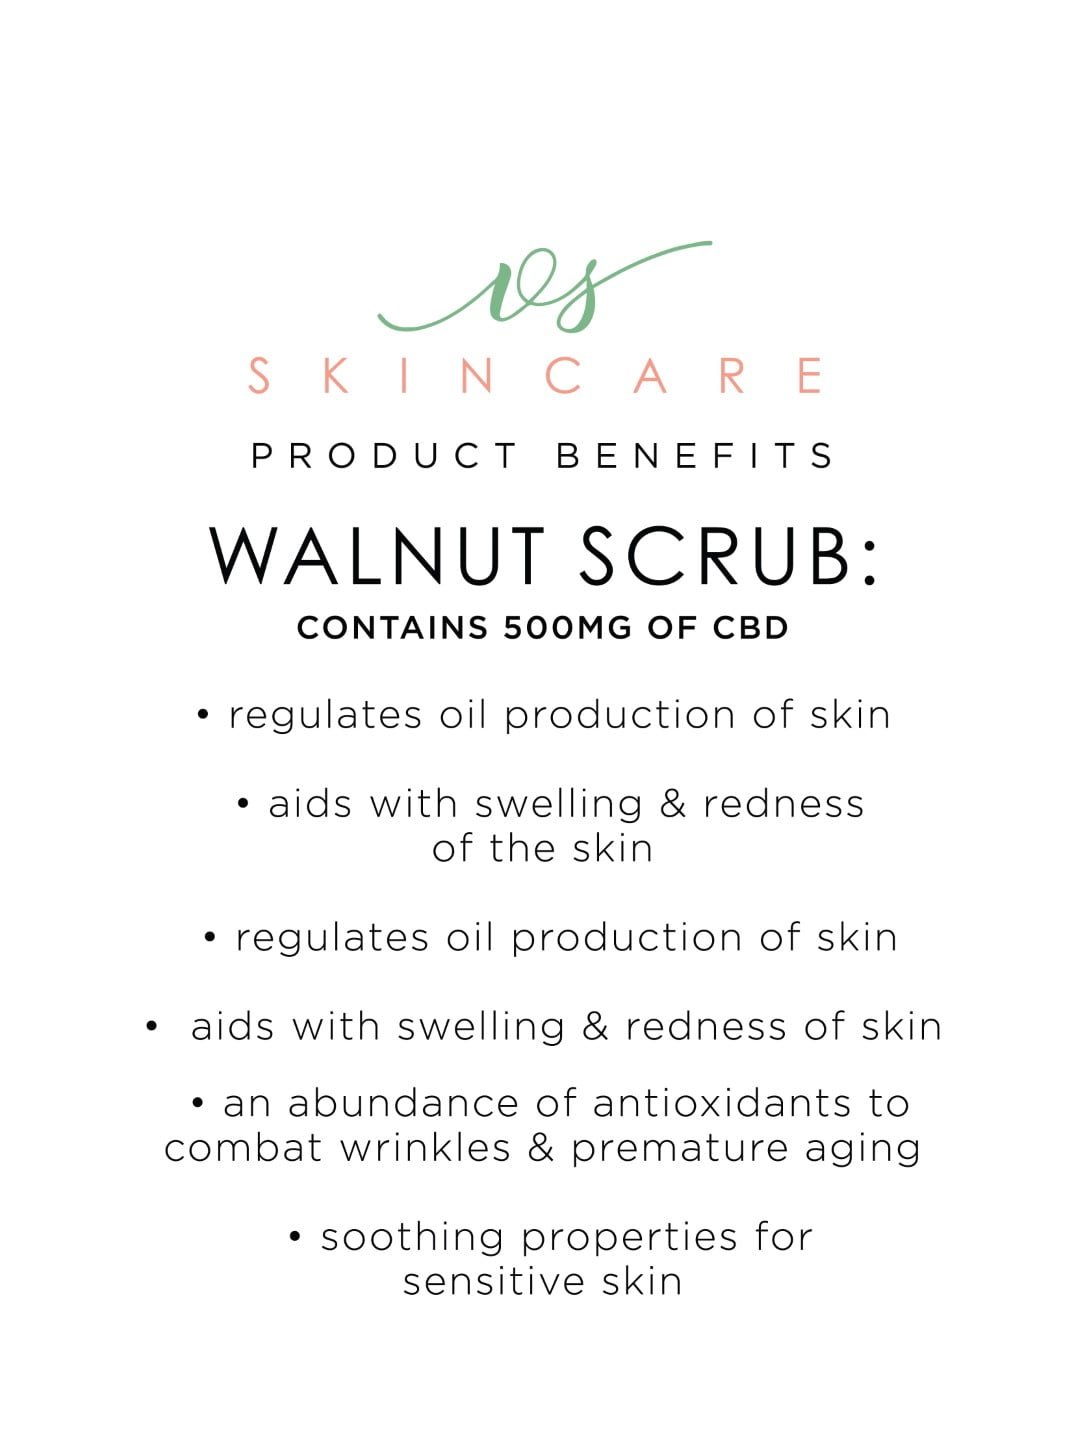 walnut scrub benefits-01 (Large)